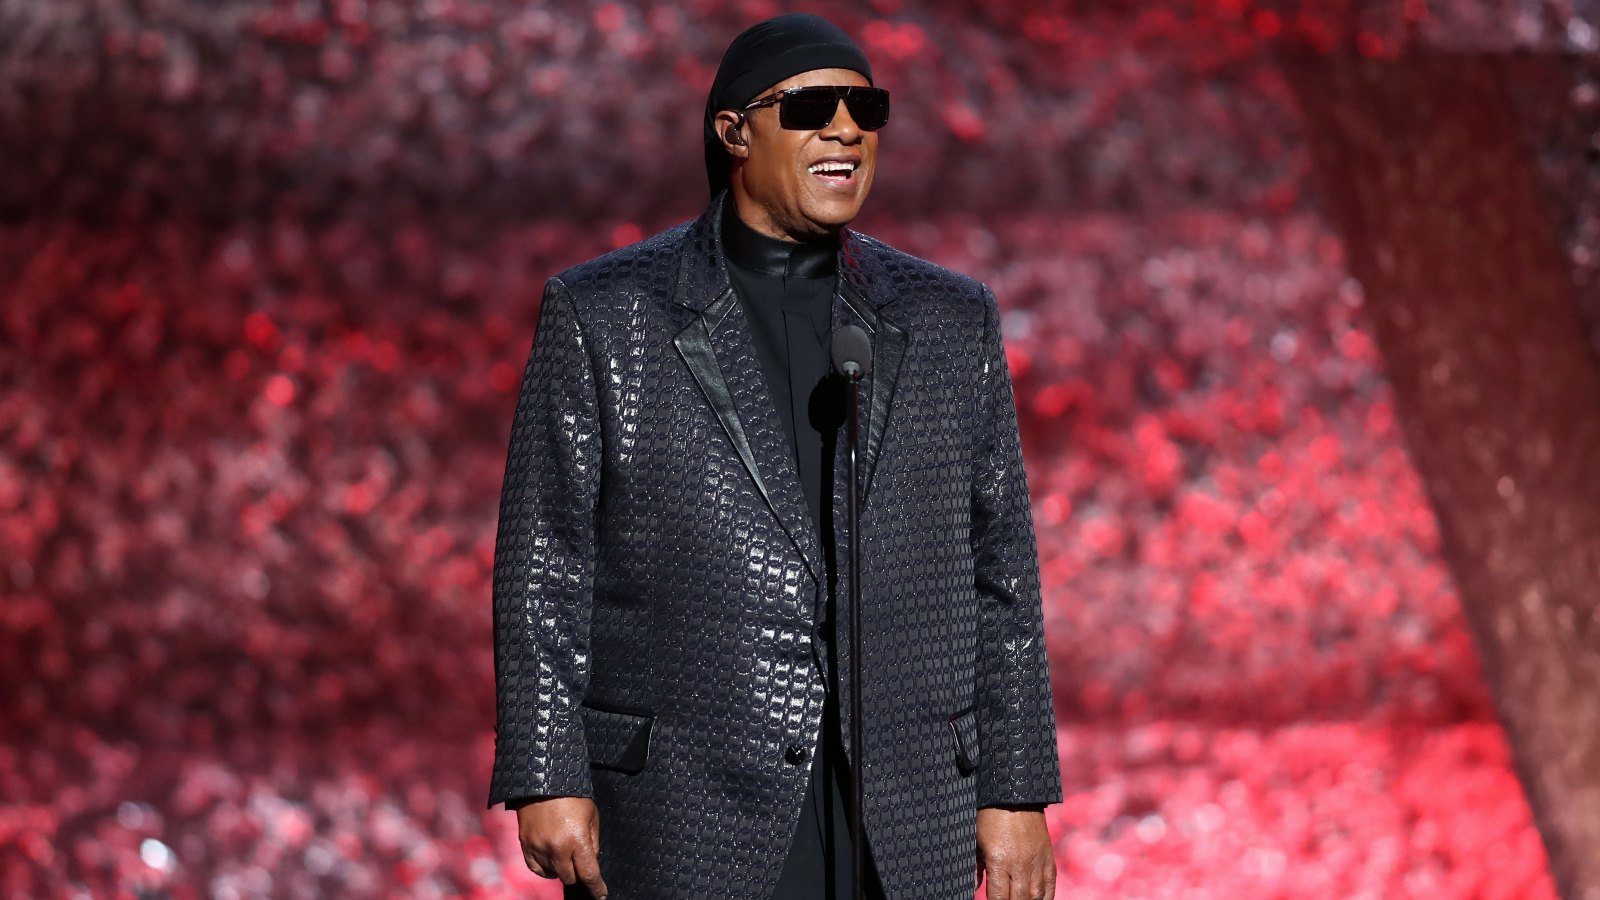 Stevie Wonder Announces He Will Undergo Kidney Surgery